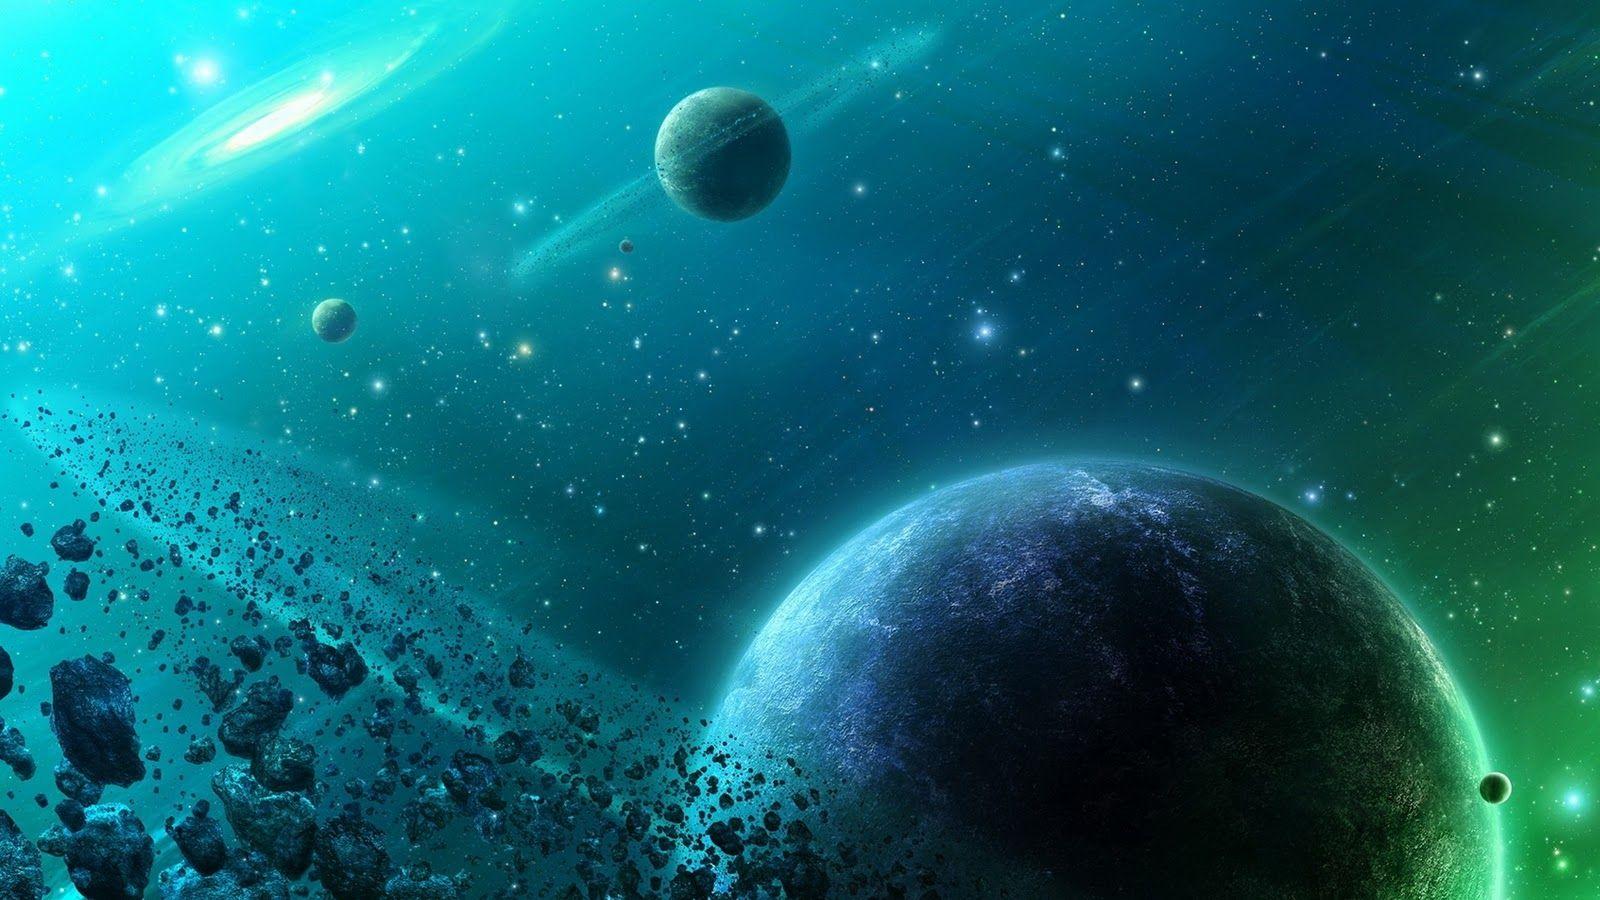 3D Space HD Desktop Wallpaper. Stars & Planets. HD